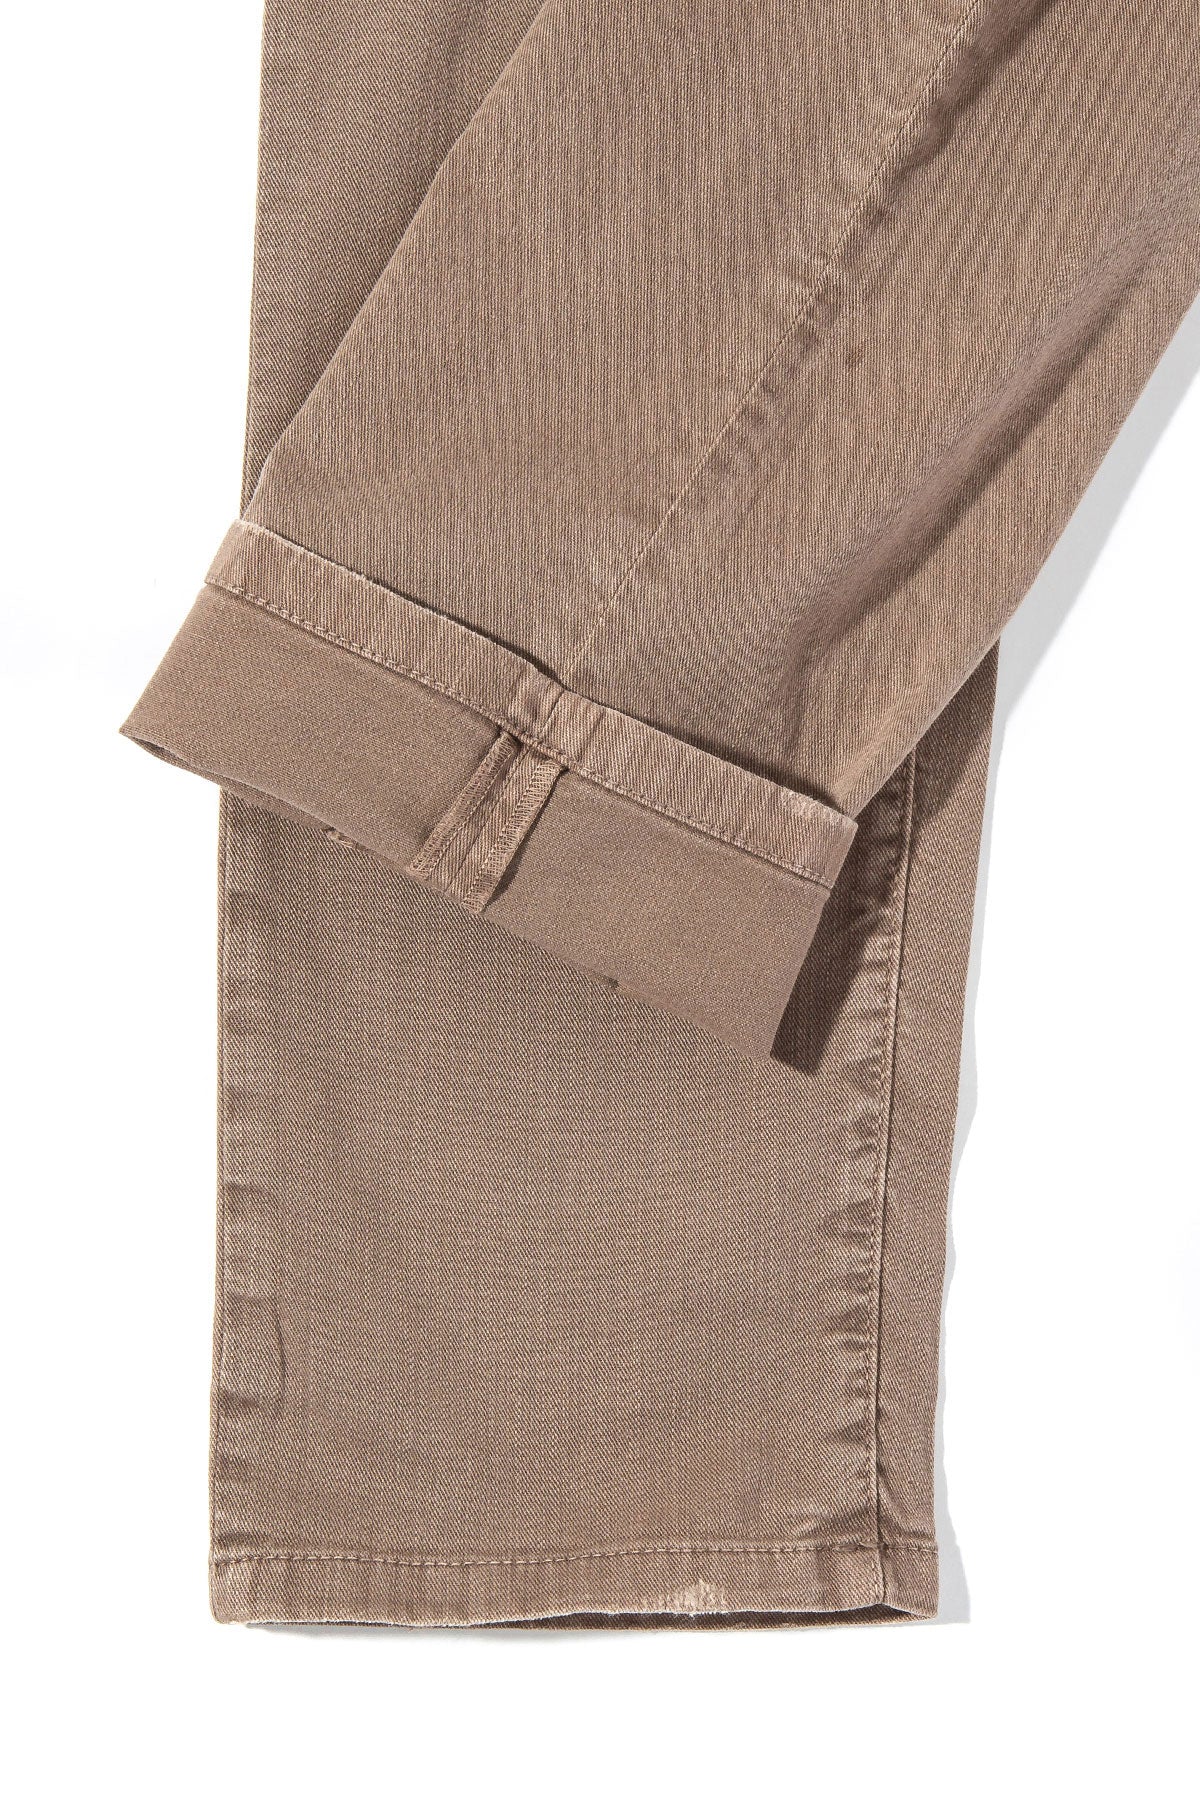 Ouray 5-Pocket Stretch Twill in Tortora | Mens - Pants - 5 Pocket | Teleria Zed